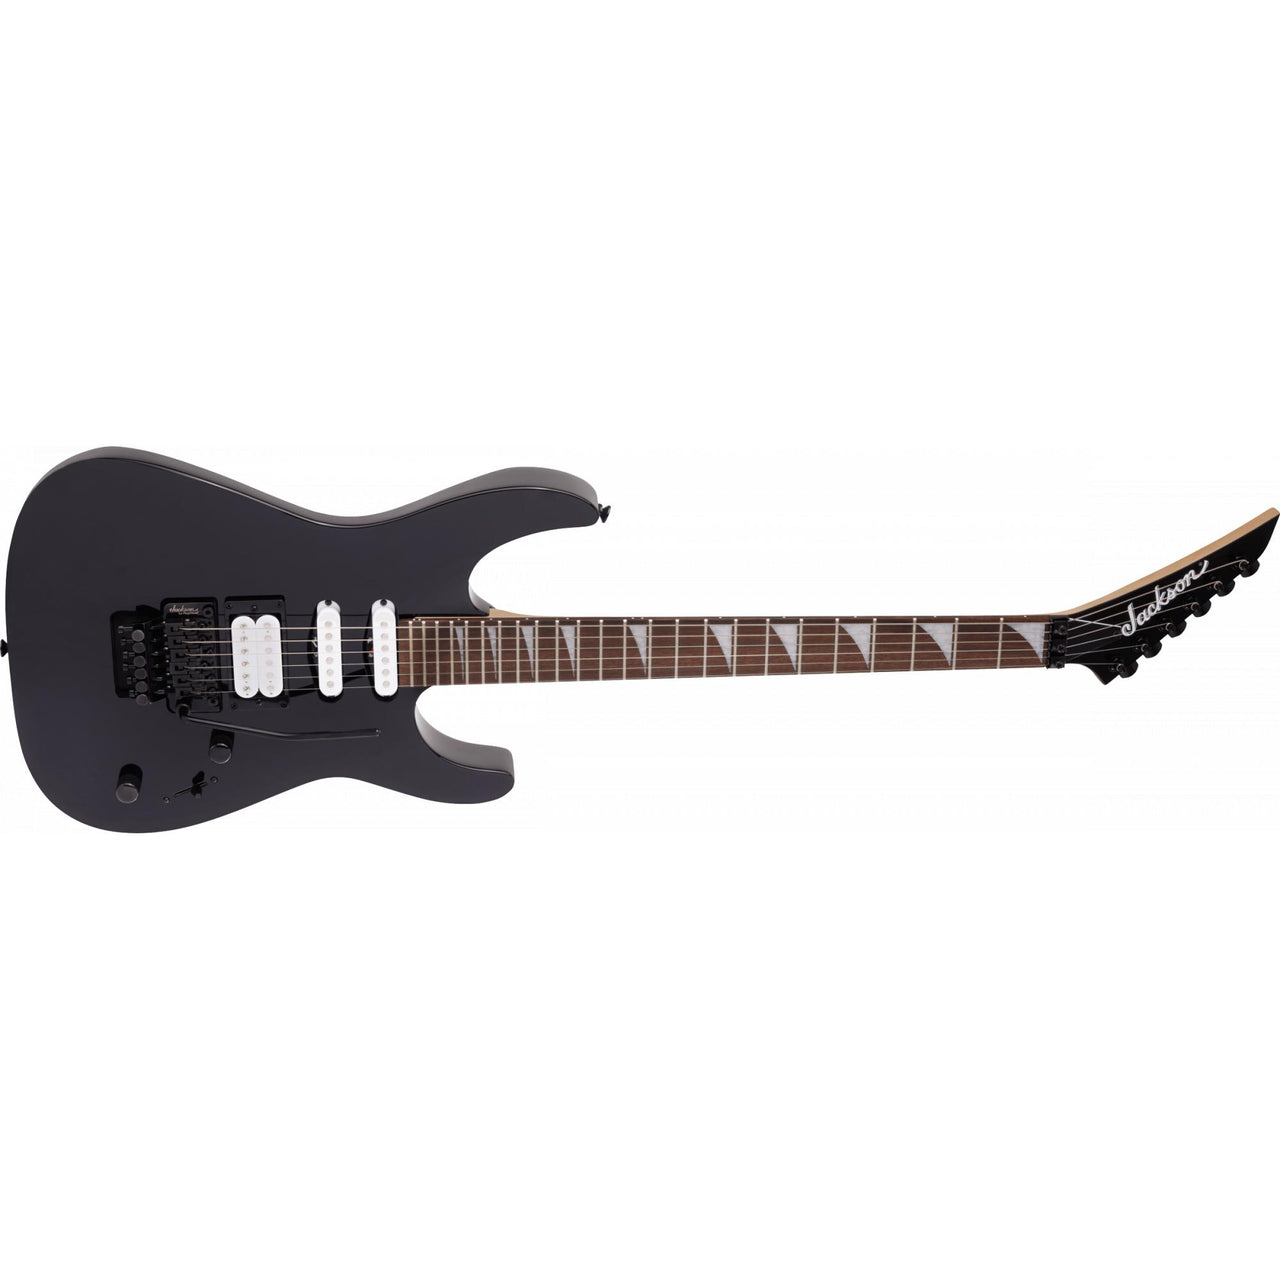 Guitarra Jackson Dk3xr Hss Electrica Black 2910022503